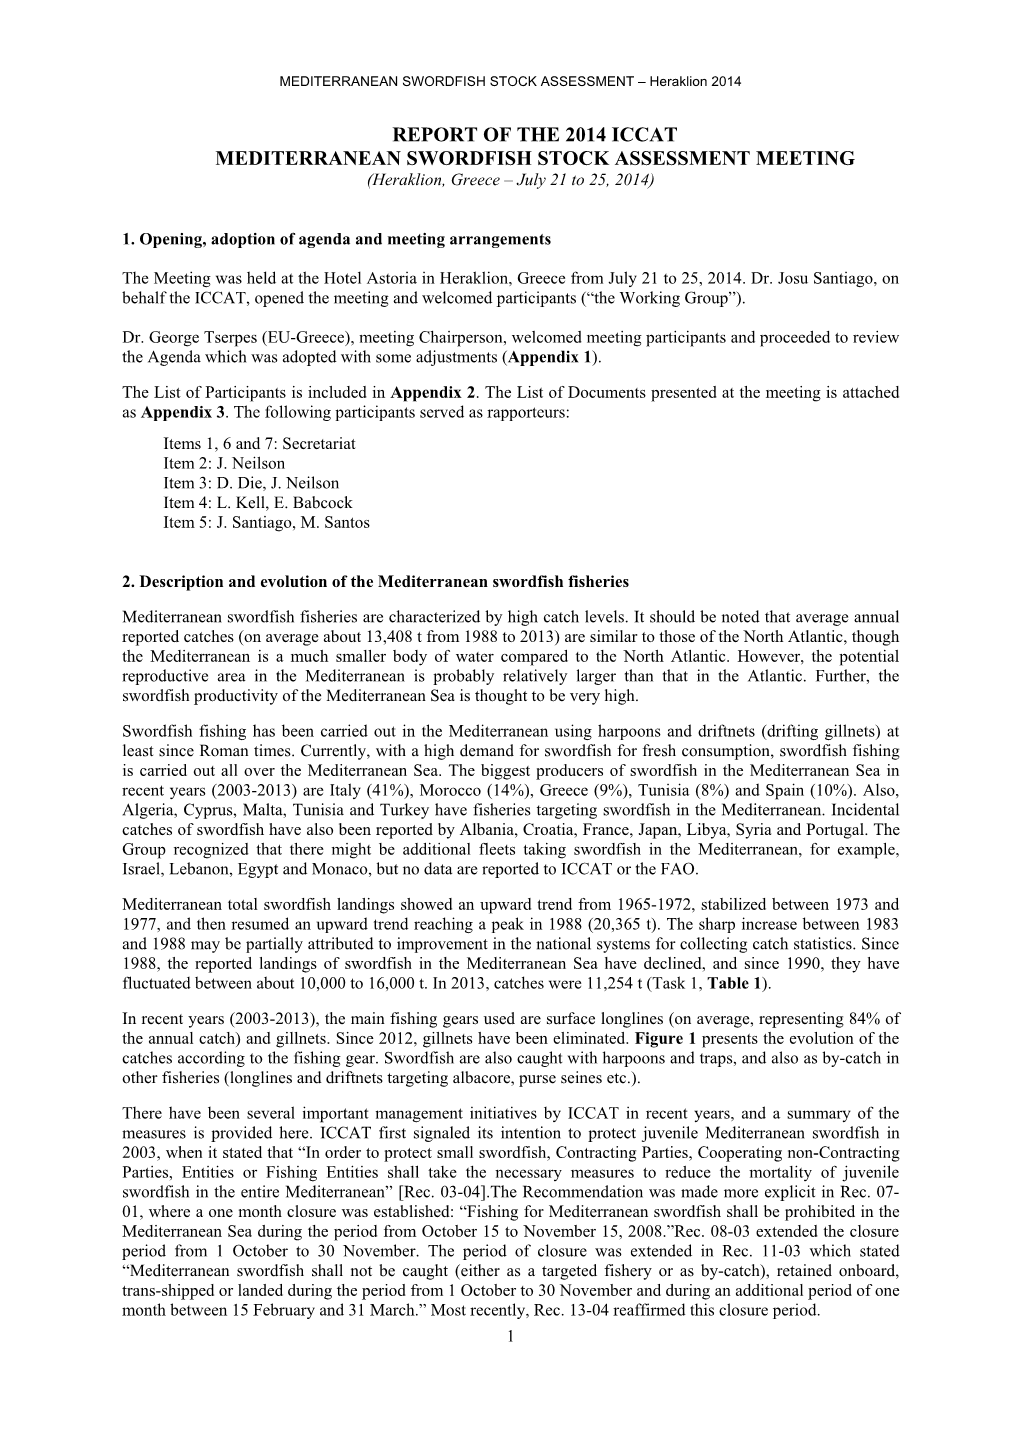 REPORT of the 2014 ICCAT MEDITERRANEAN SWORDFISH STOCK ASSESSMENT MEETING (Heraklion, Greece – July 21 to 25, 2014)